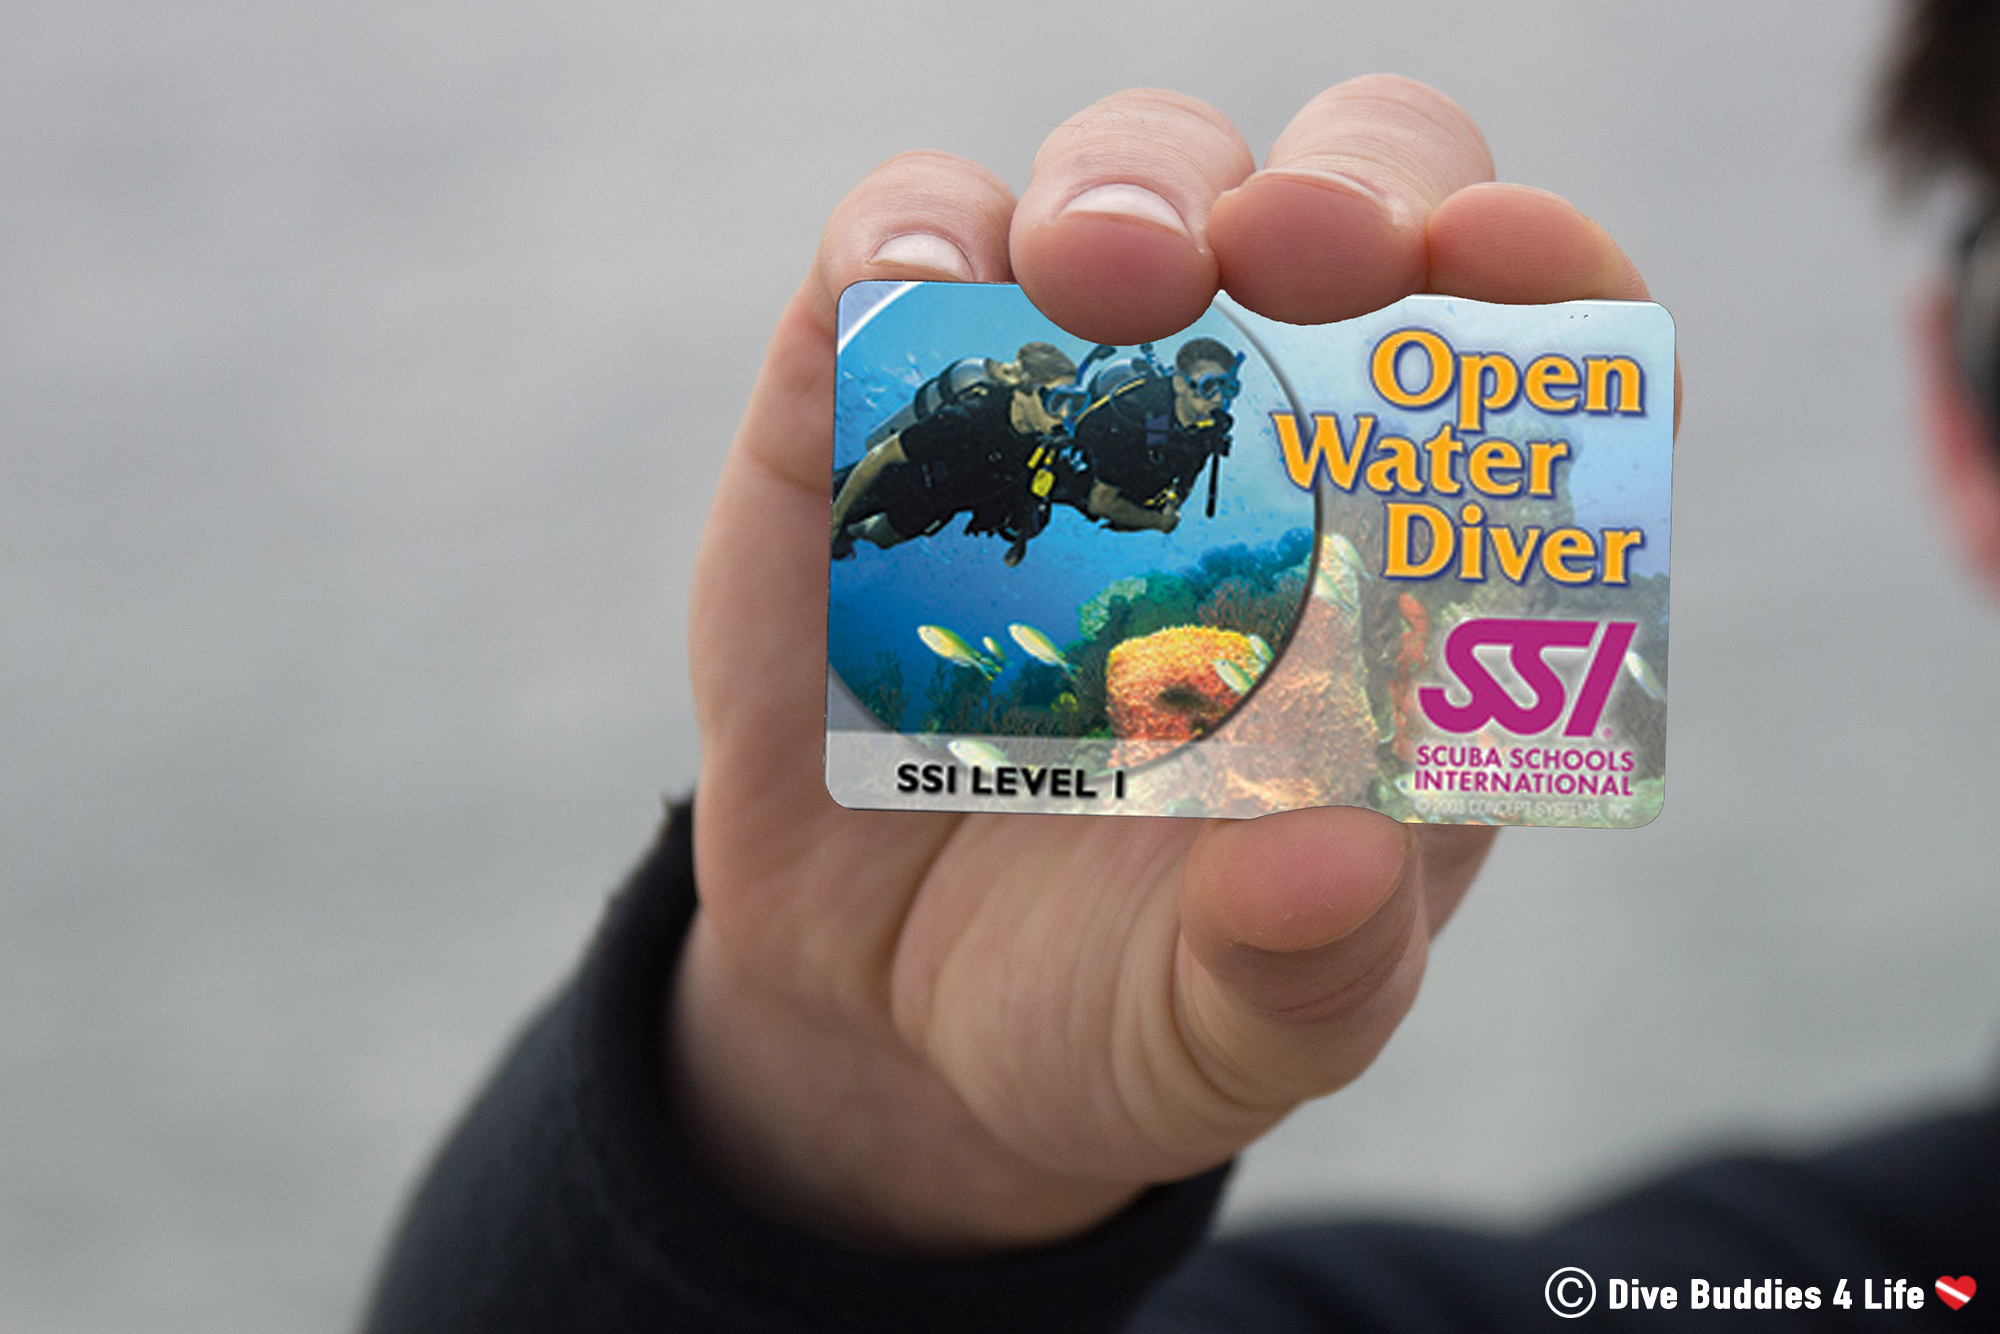 SSI Scuba Diving Certification Card Near The Ocean, Scuba Agency Overview